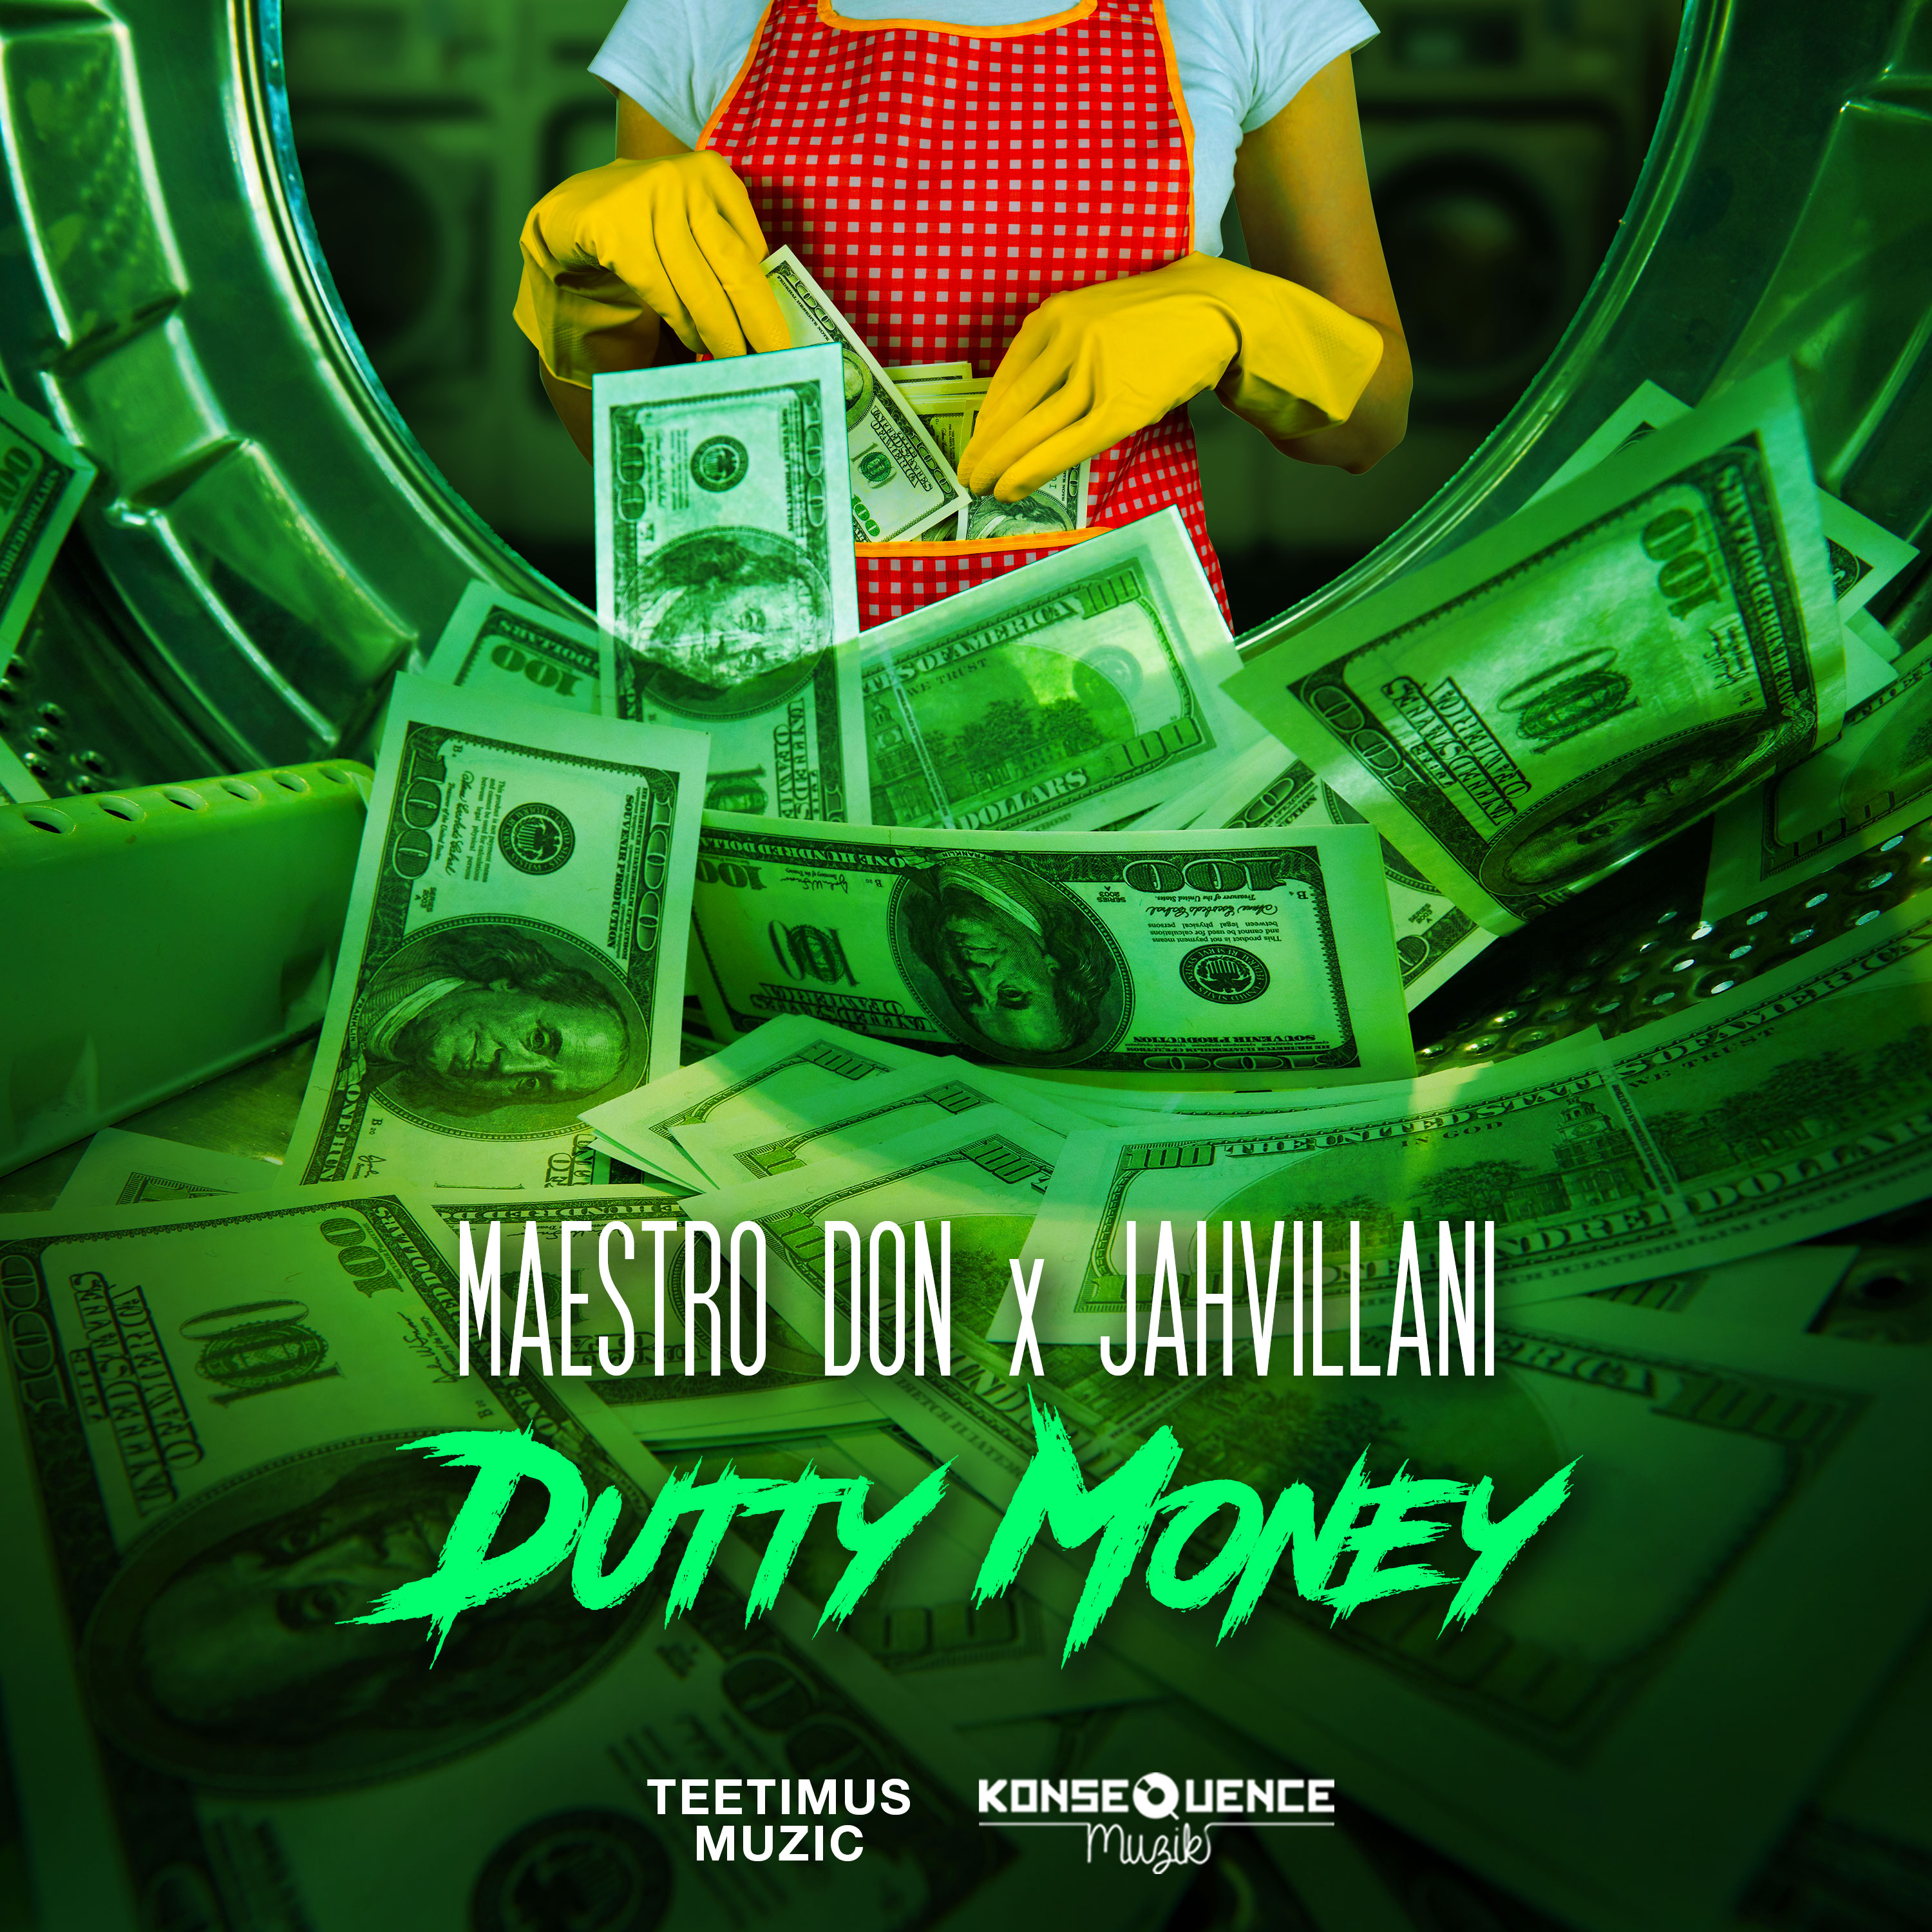 Art for Dutty Money [Clean] by Maestro Don x Jahvillani